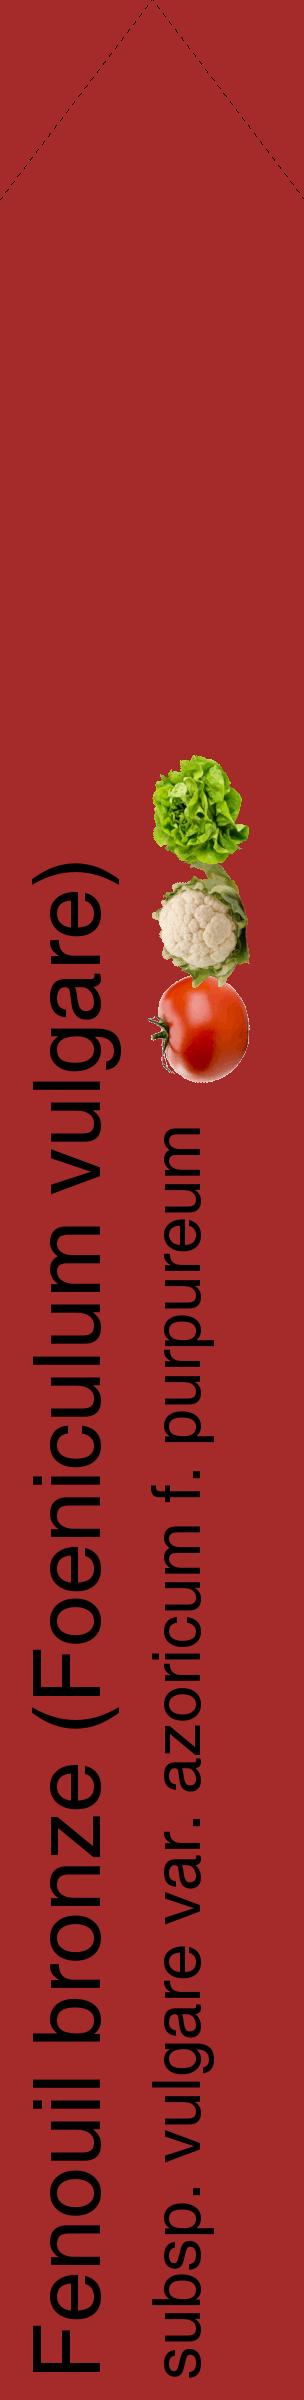 Étiquette de : Foeniculum vulgare subsp. vulgare var. azoricum f. purpureum - format c - style noire33_simplehel avec comestibilité simplifiée